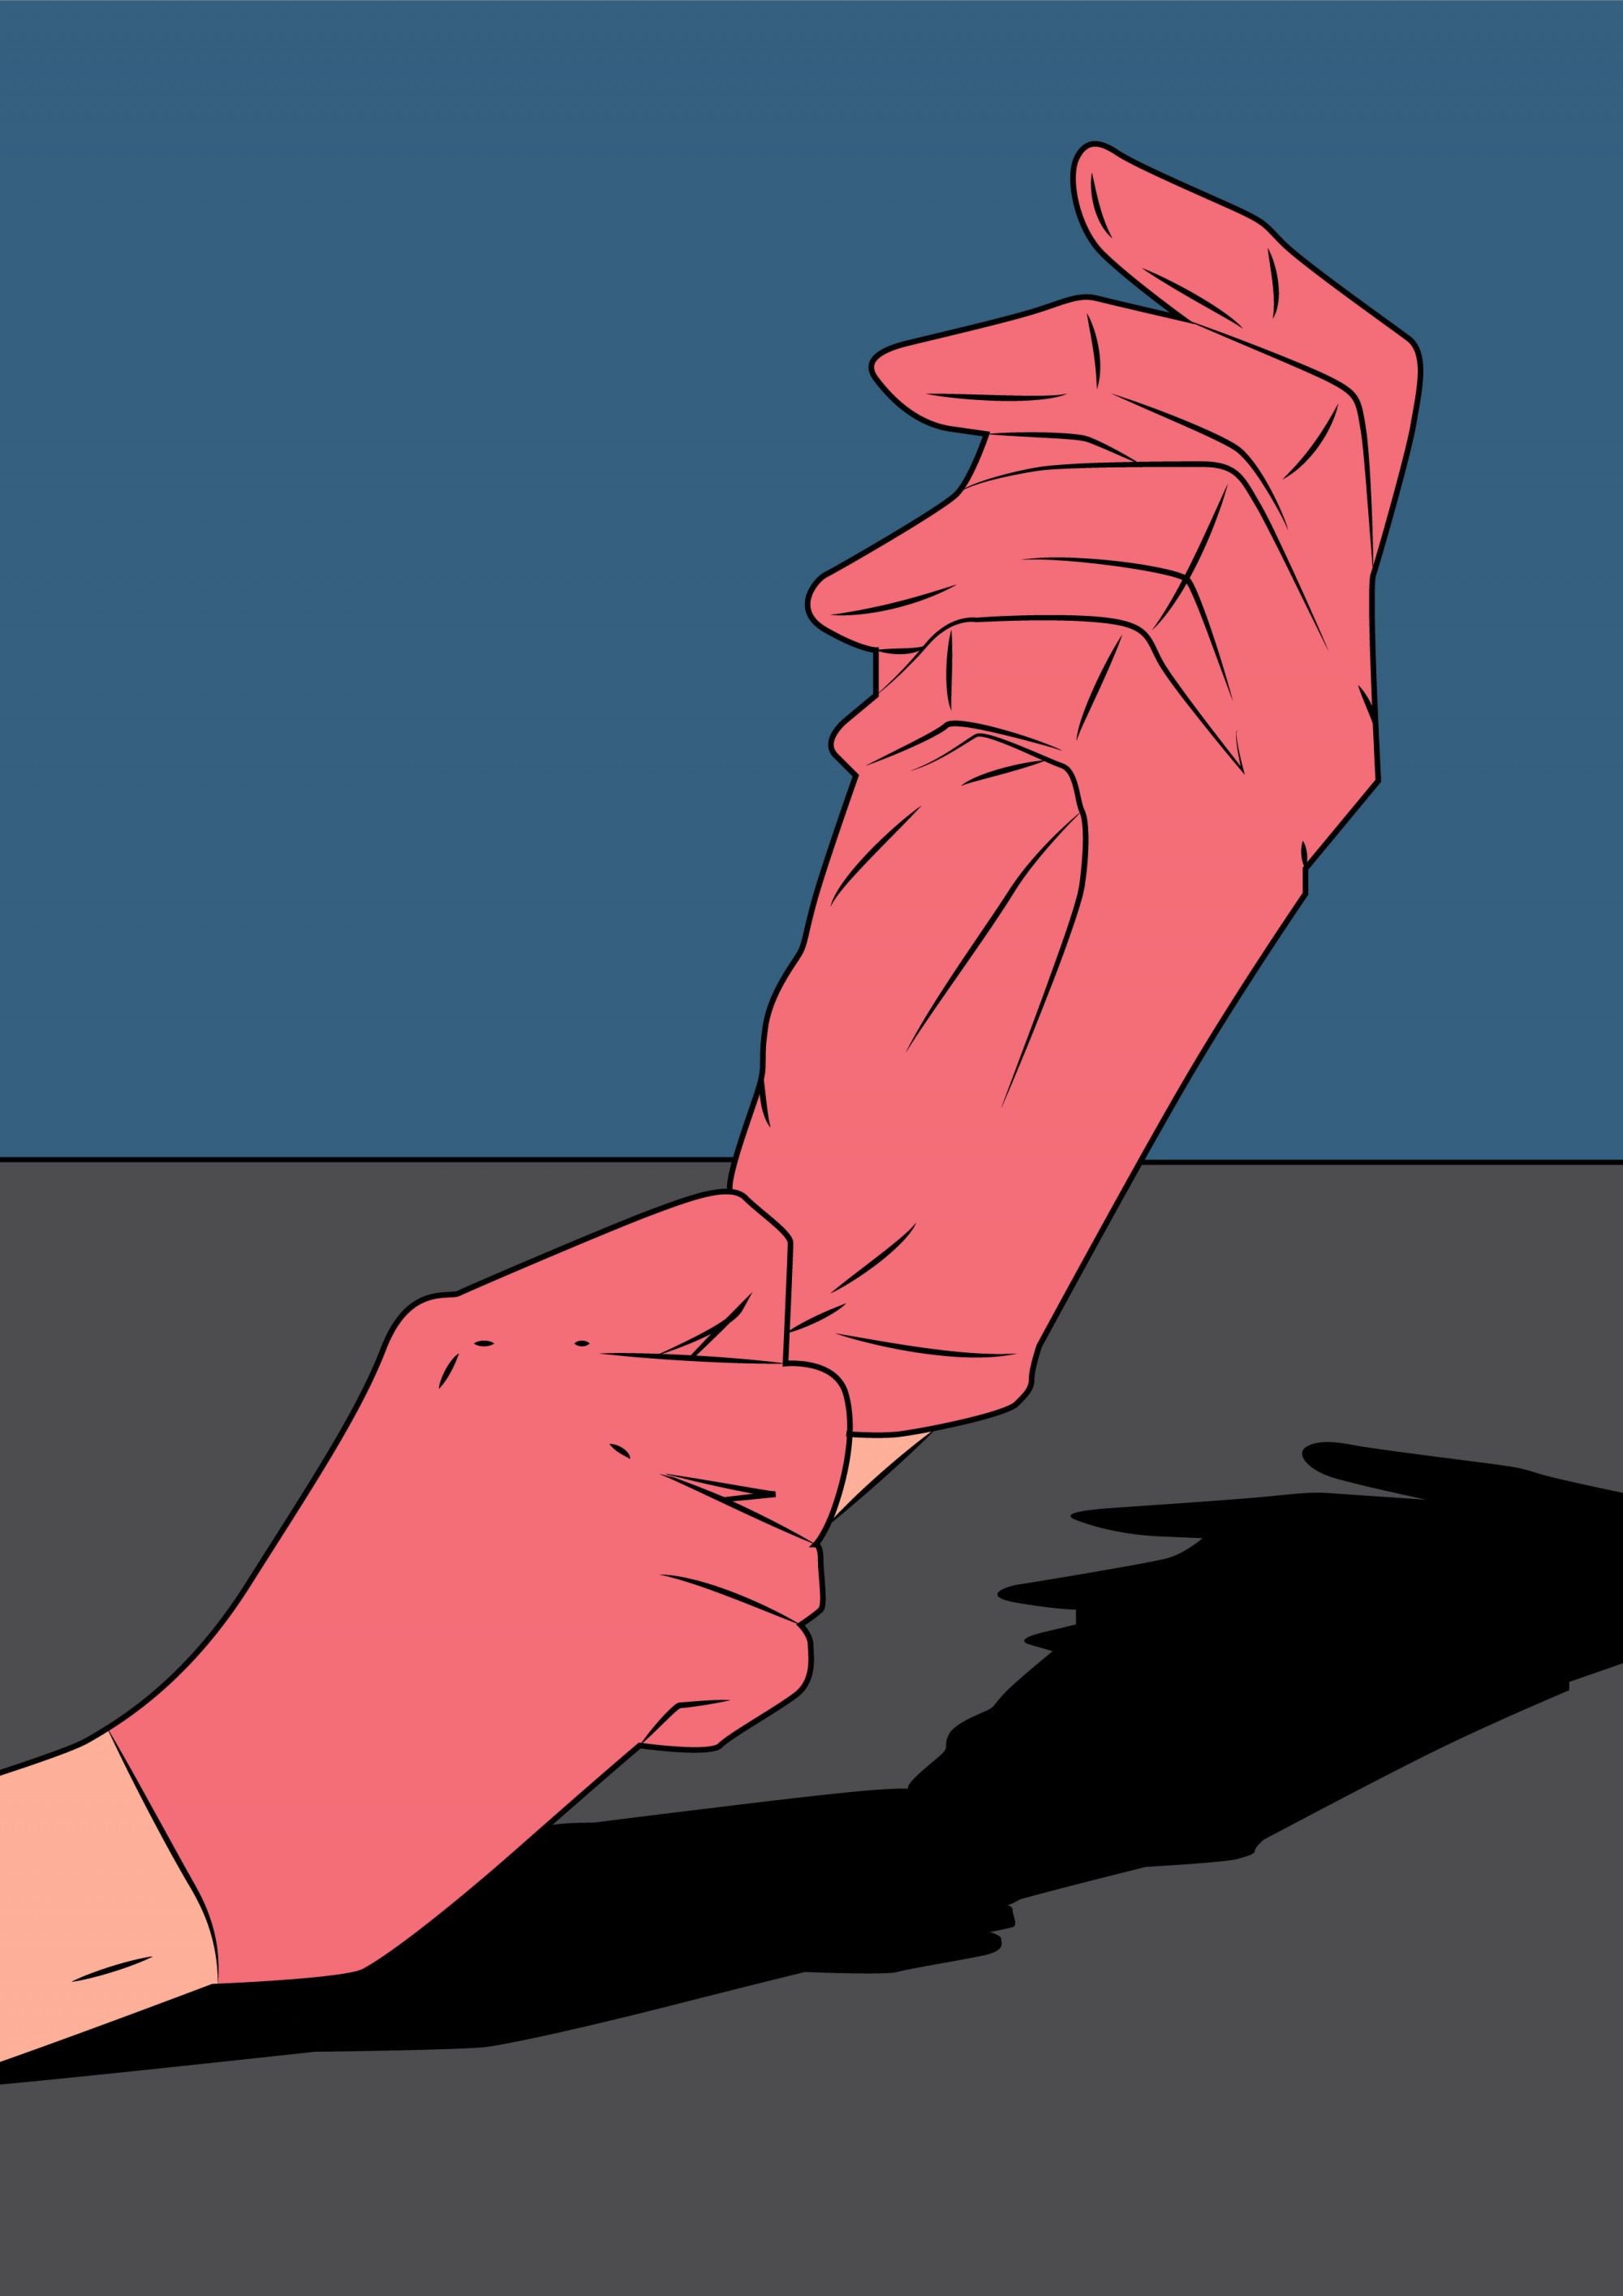 Zwei Hande in rosafarbenen Handschuhen